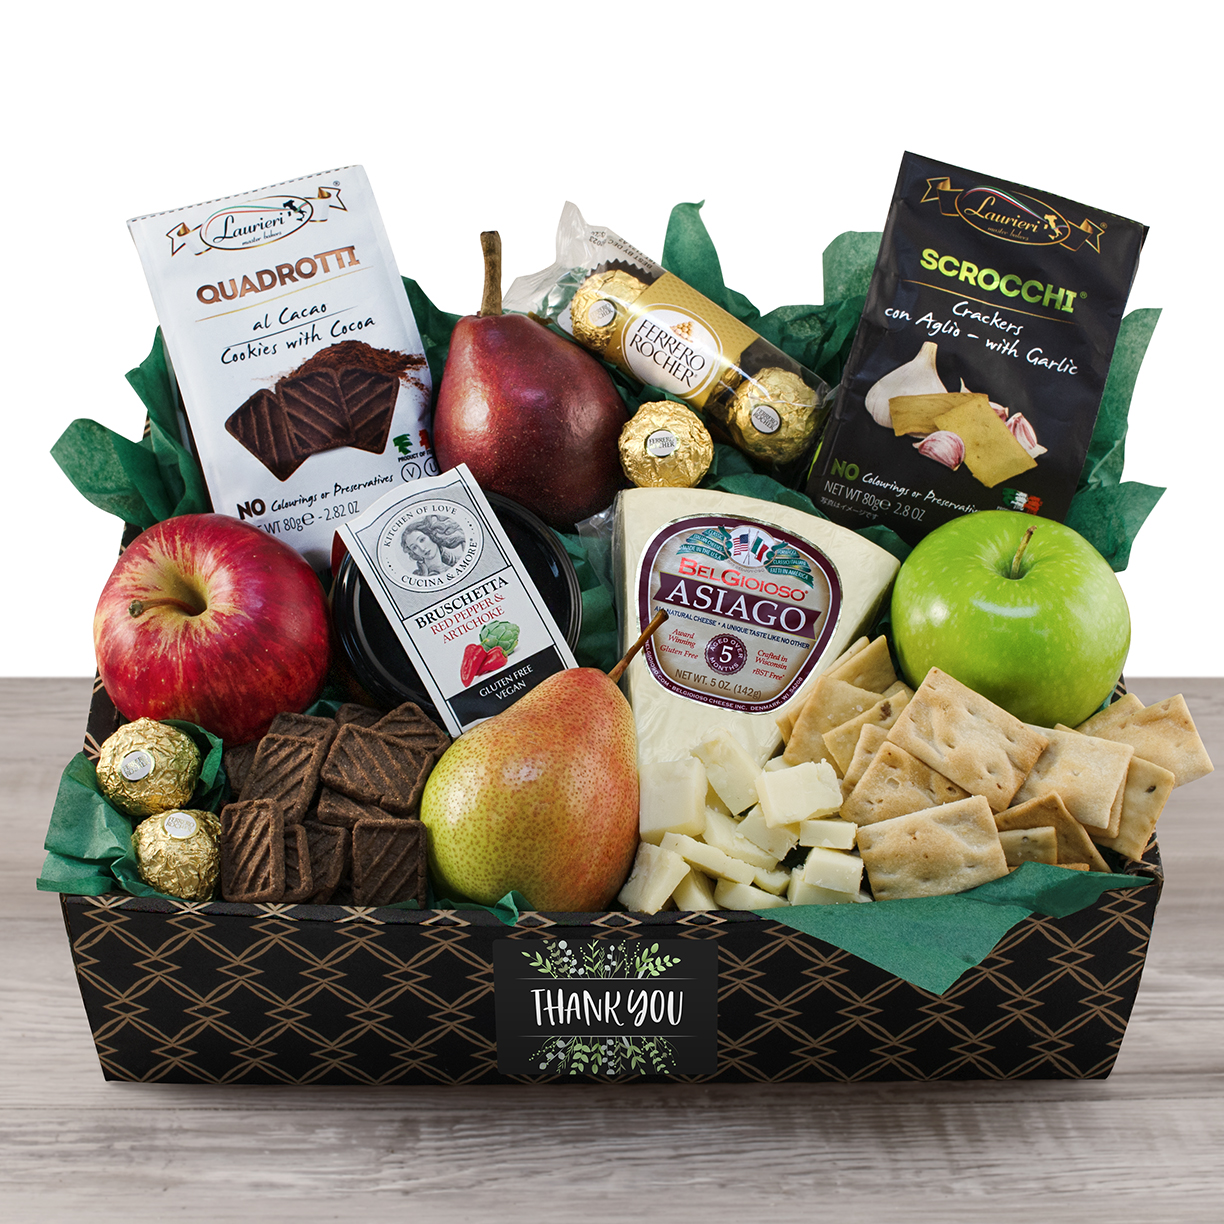 Italian Pride Of The Farm Fruit Gift Box - Thank You By Capalbo's Gift Baskets , Fruit Gift Baskets , Thank You Gift Baskets , Gift Baskets Delivered